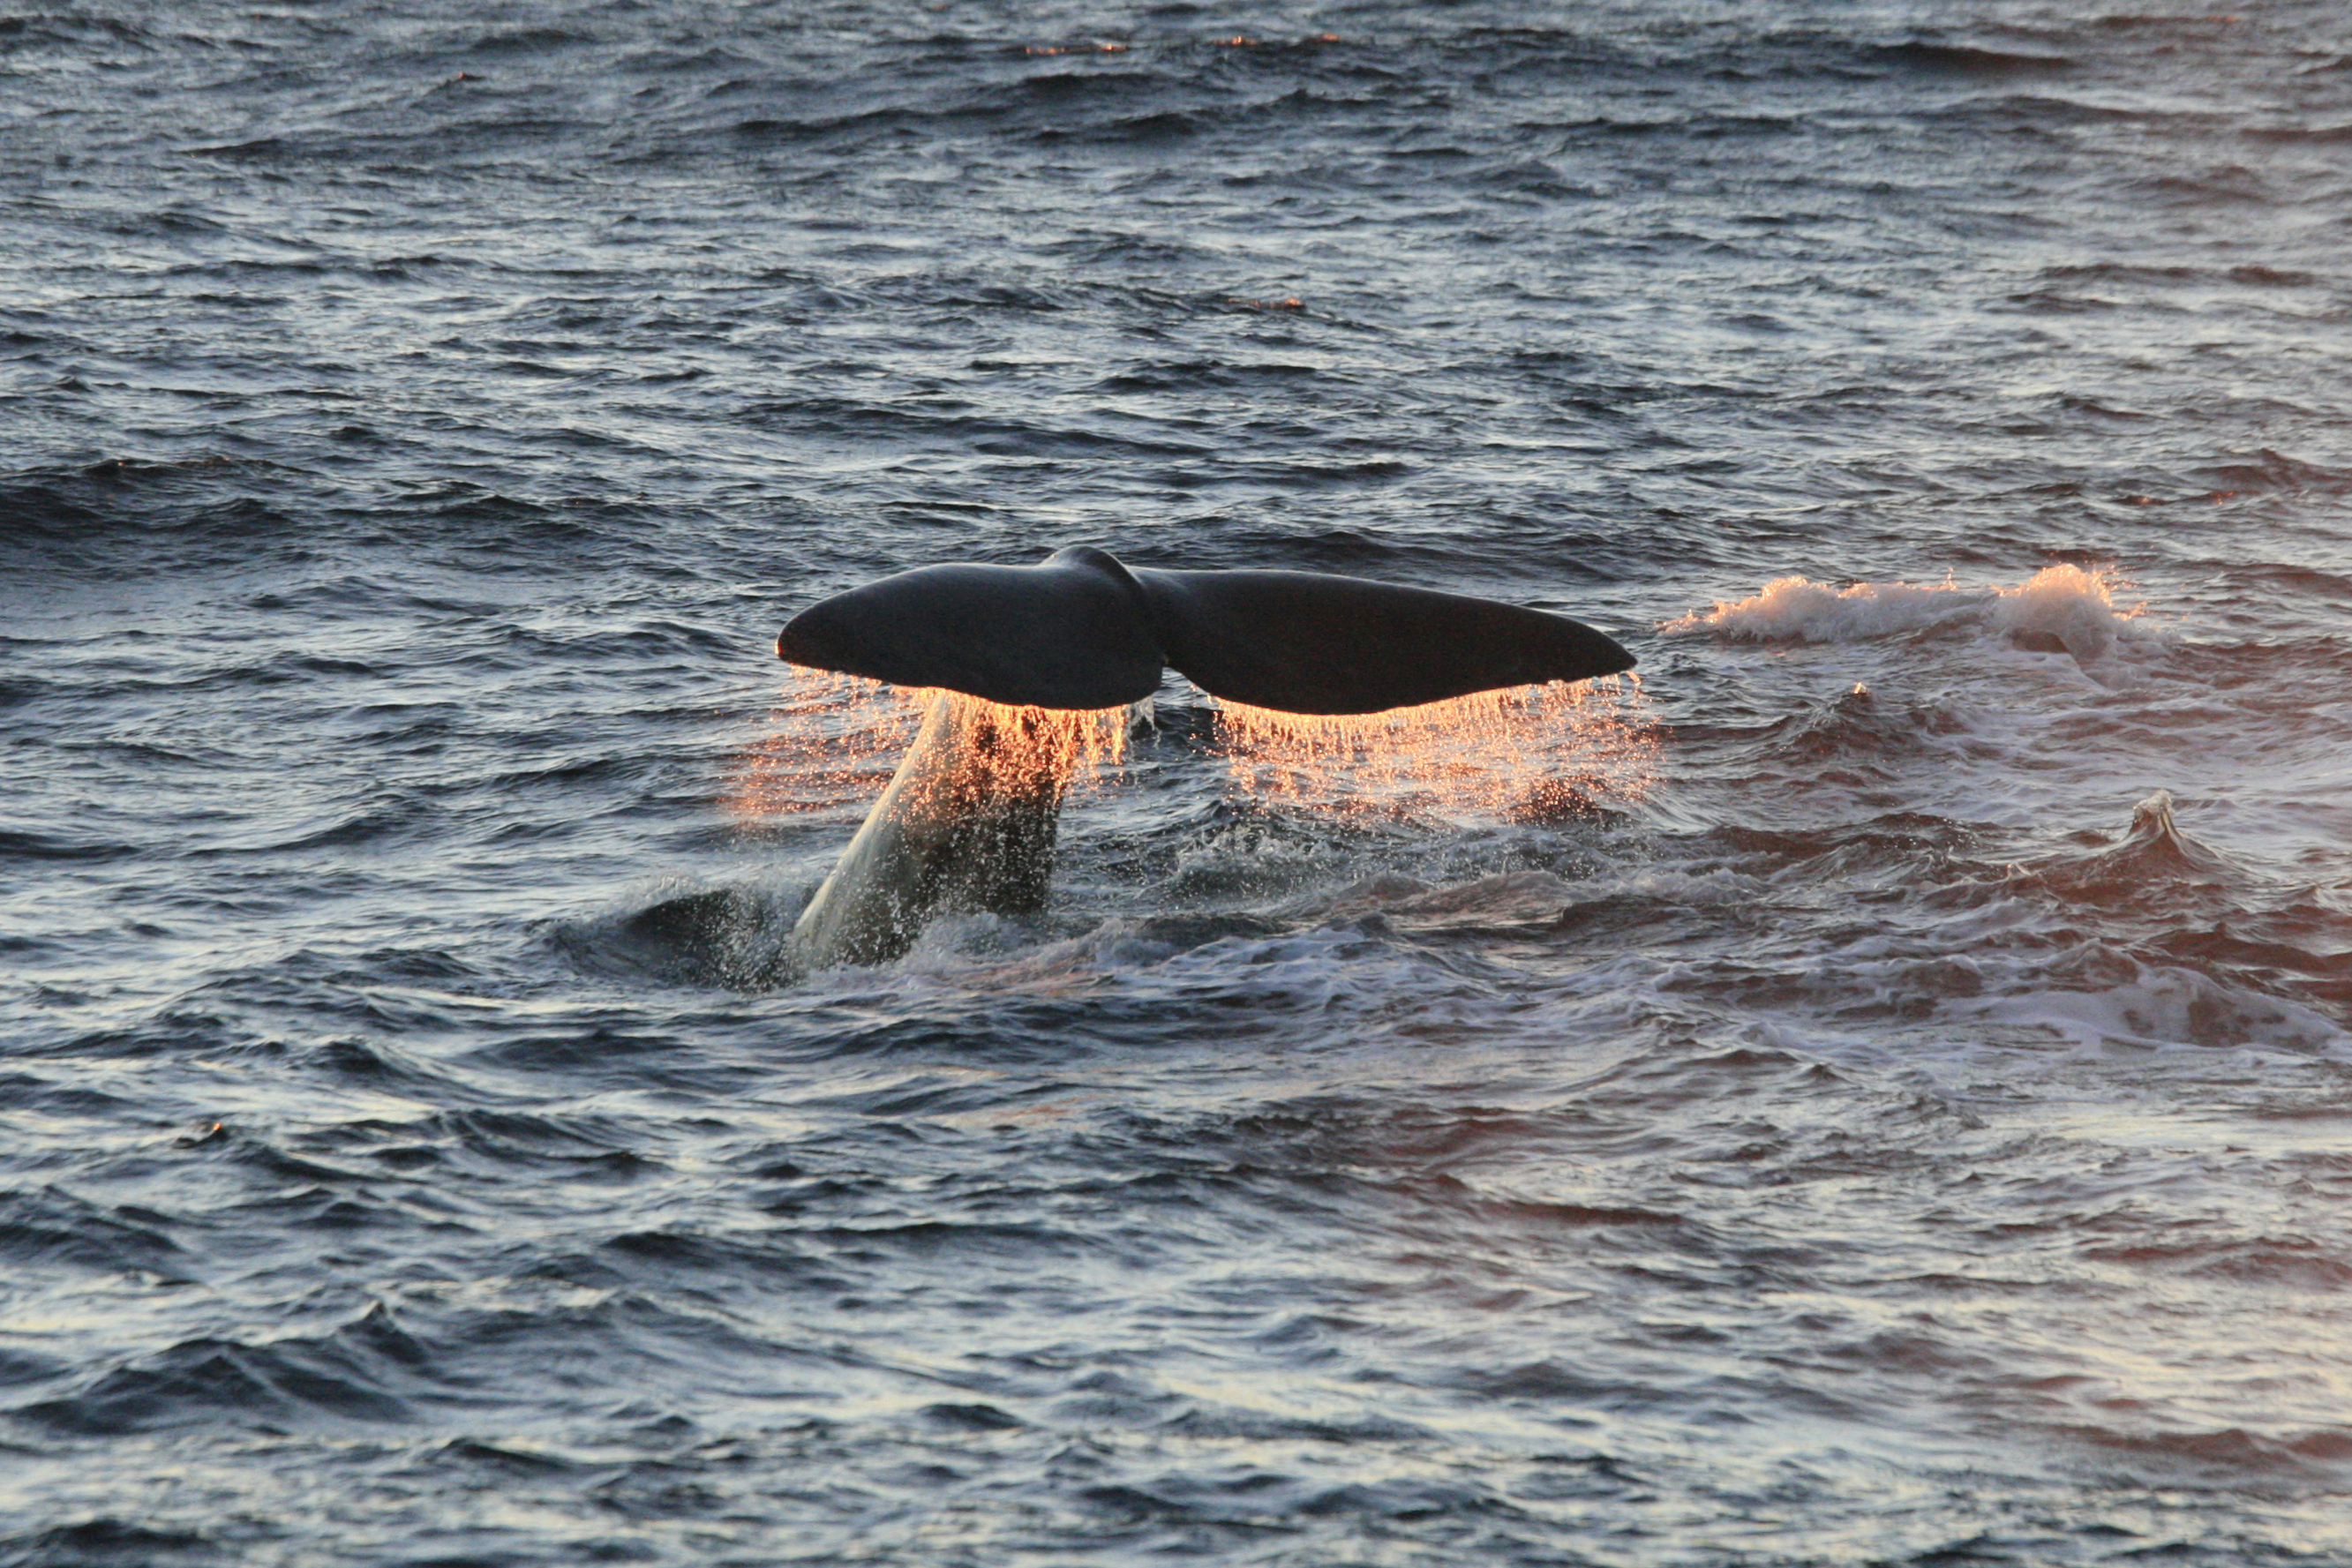 sperm whale, Physeter macrocephalus, Norway, Norwegian Sea, Atla